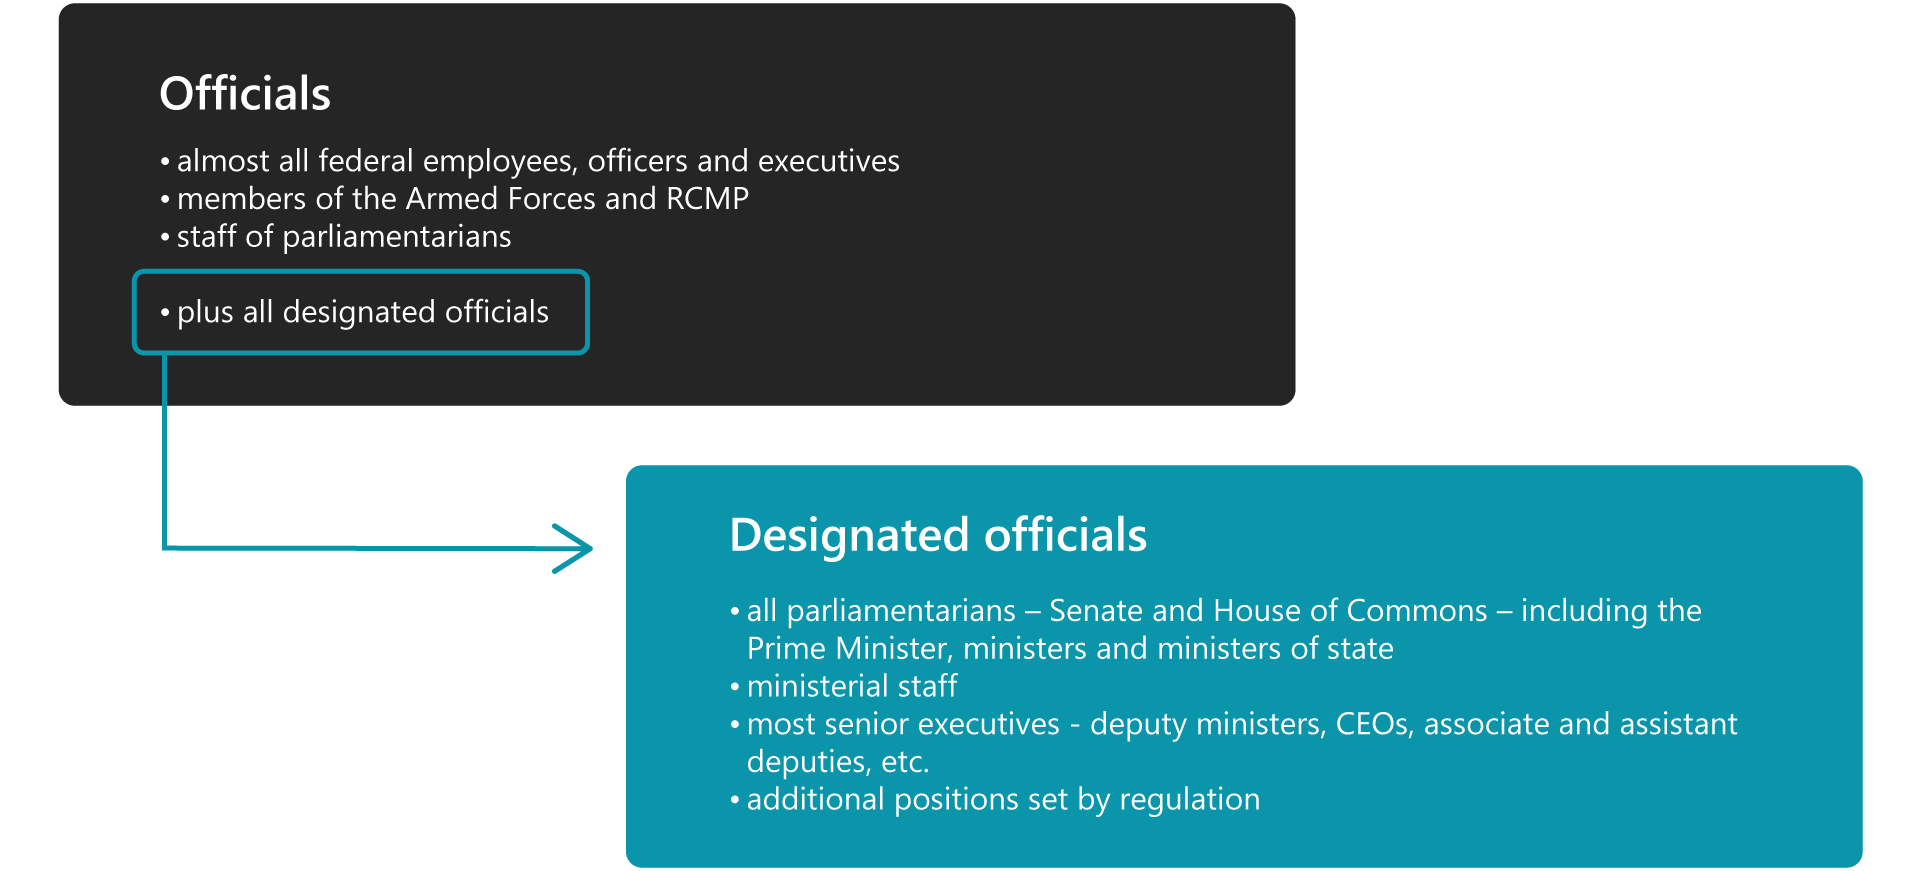 Infographic describing officials and designated officials